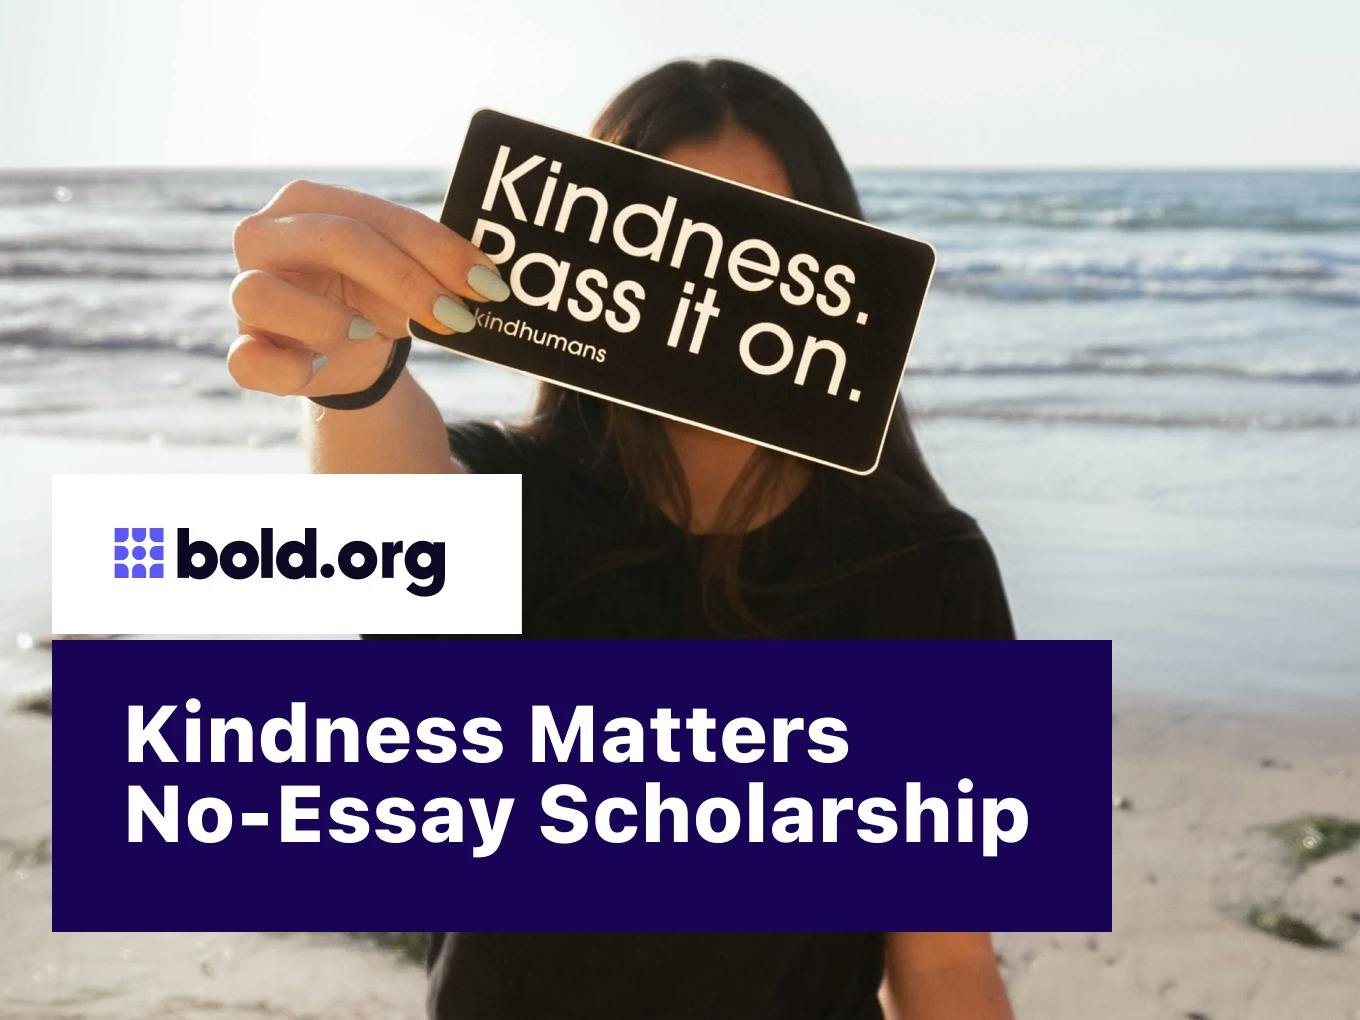 Bold.org Kindness Matters No-Essay Scholarship